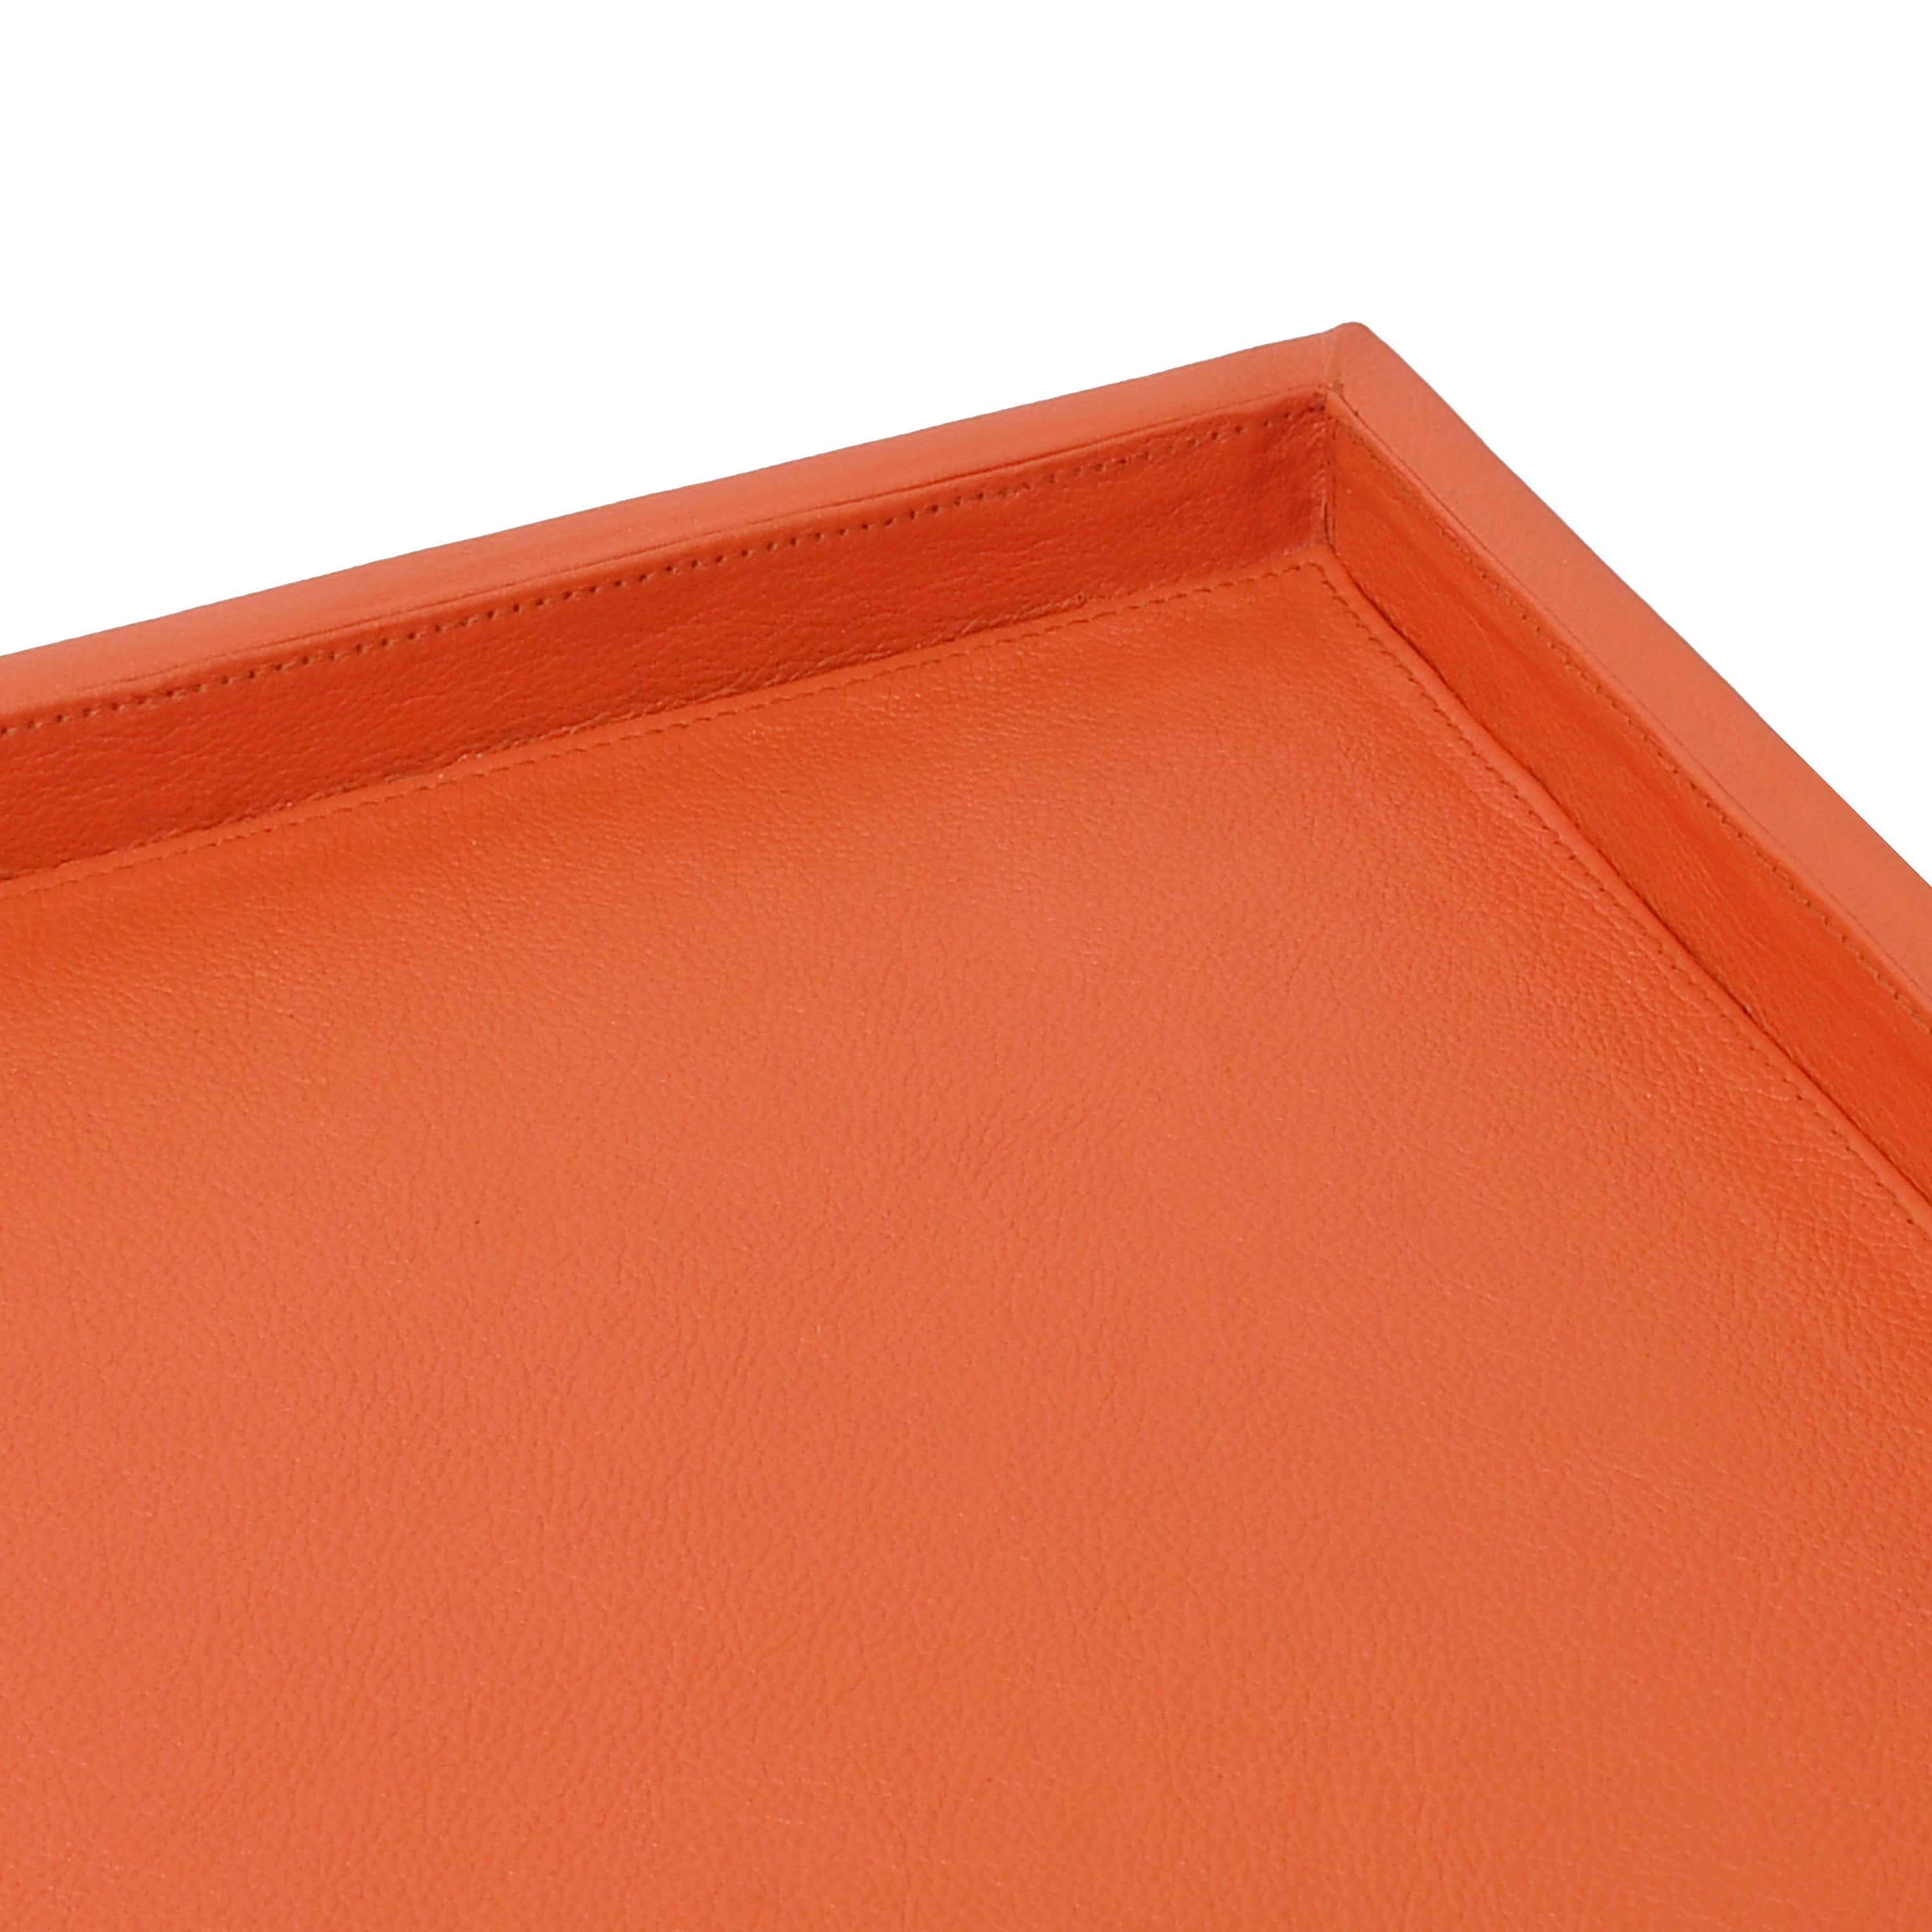 Orange Leather Wrapped Tray Close Up